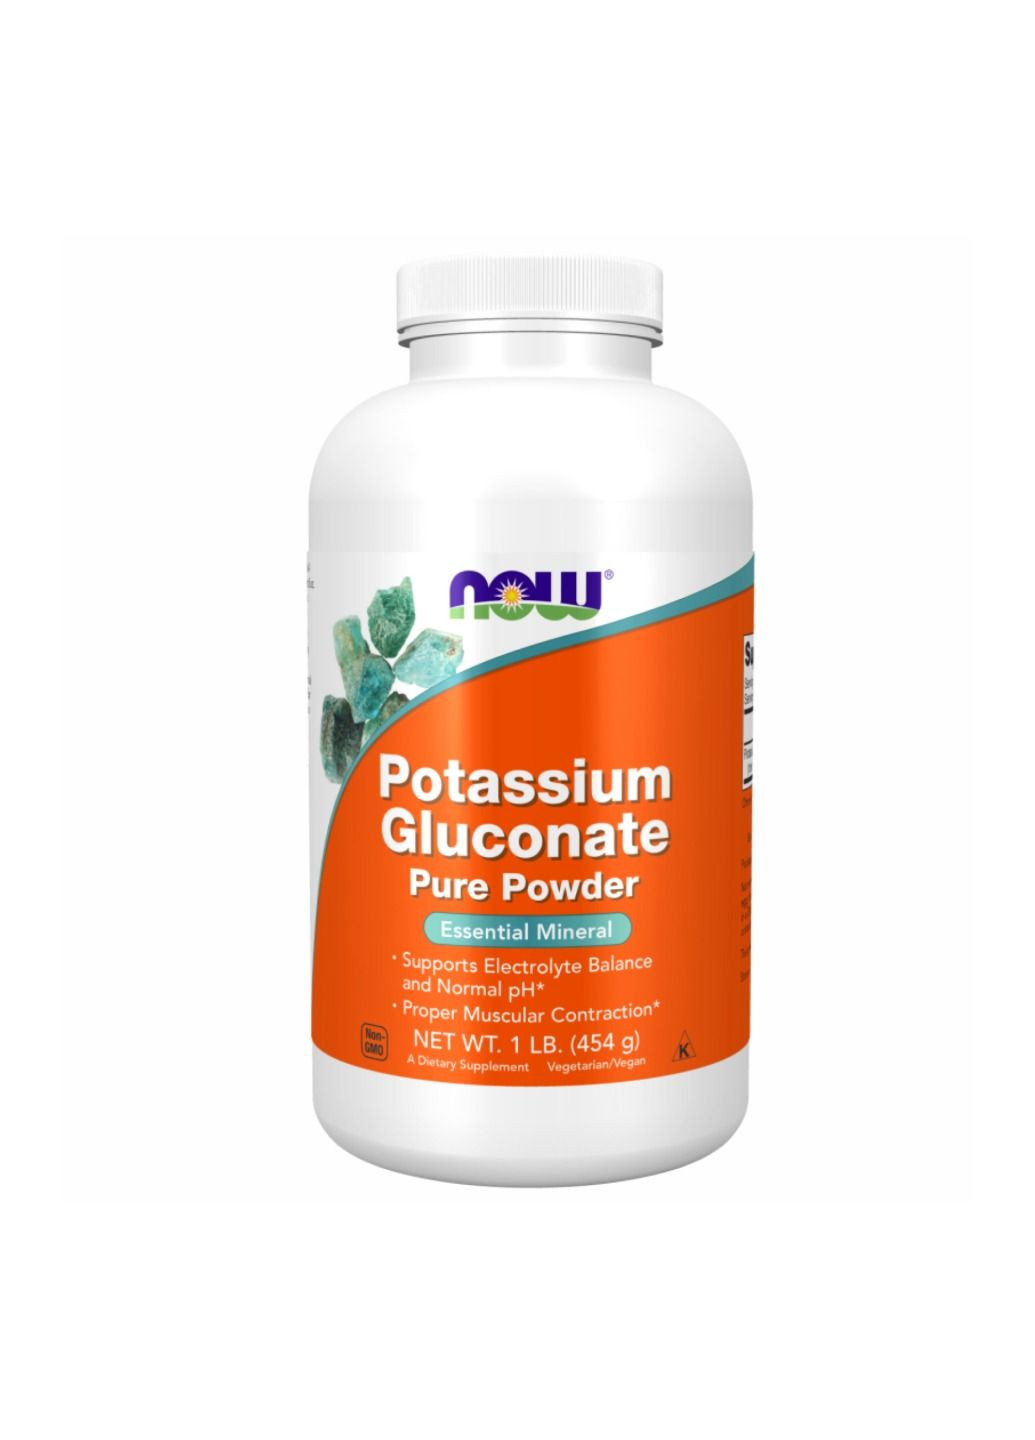 Калий Potassium Gluconate Pure Powder - 454g Now Foods (280899562)